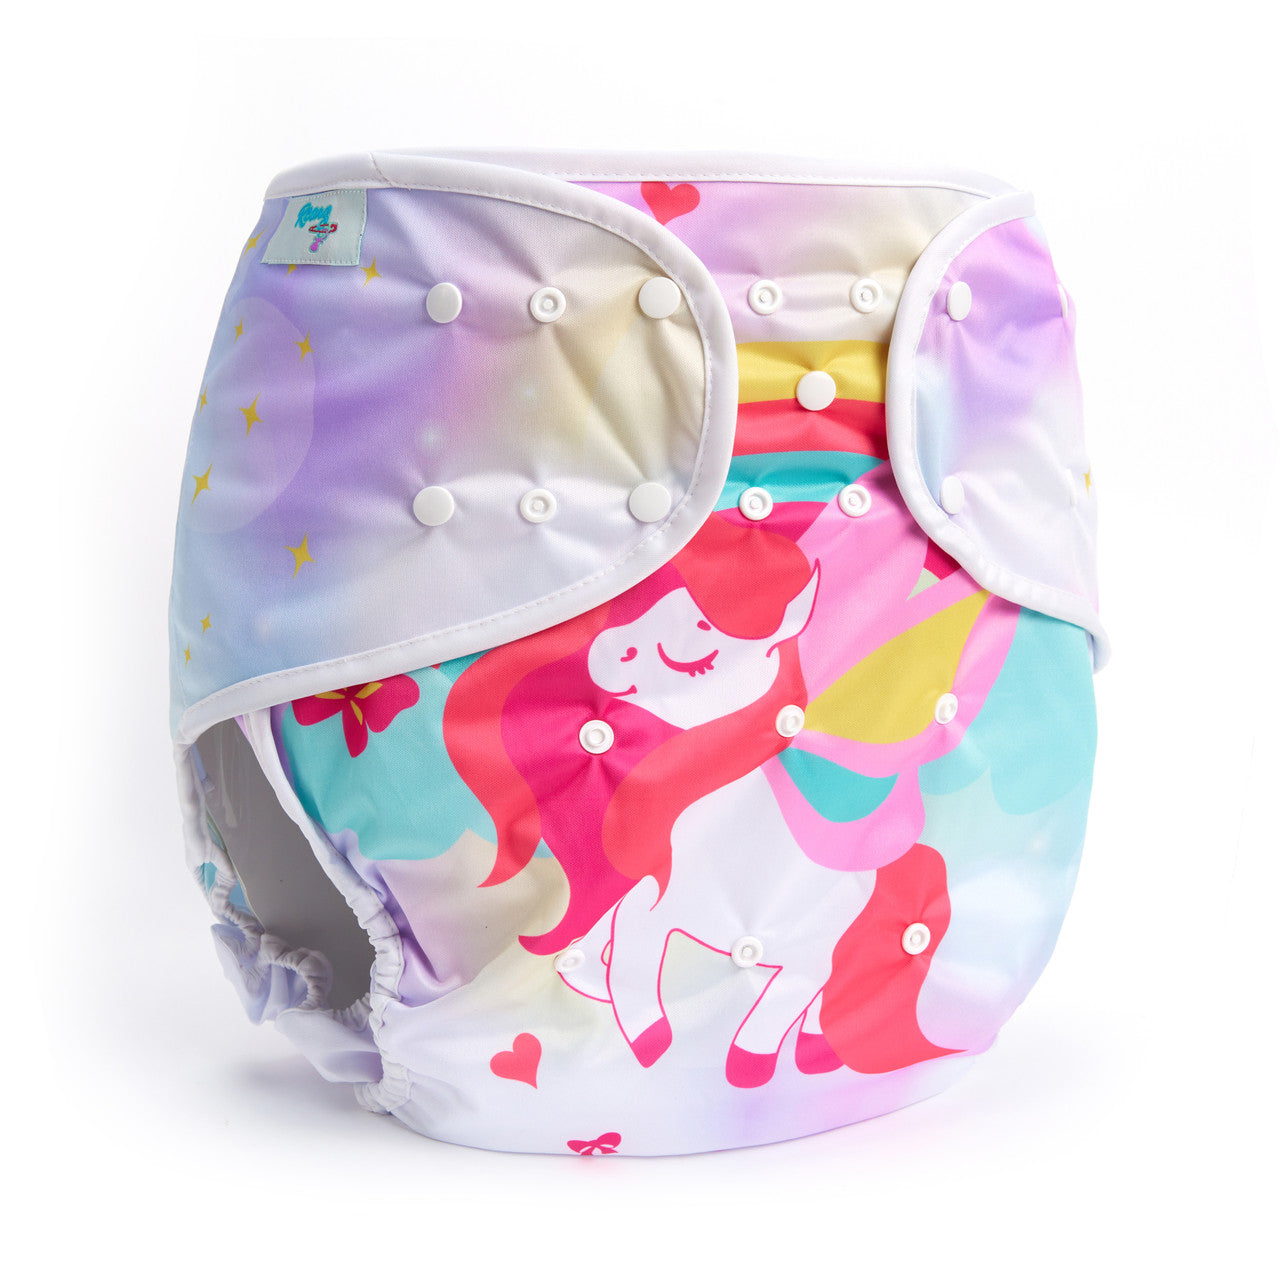 Rearz - Adult Diaper Cover/Wrap - Magical Bella